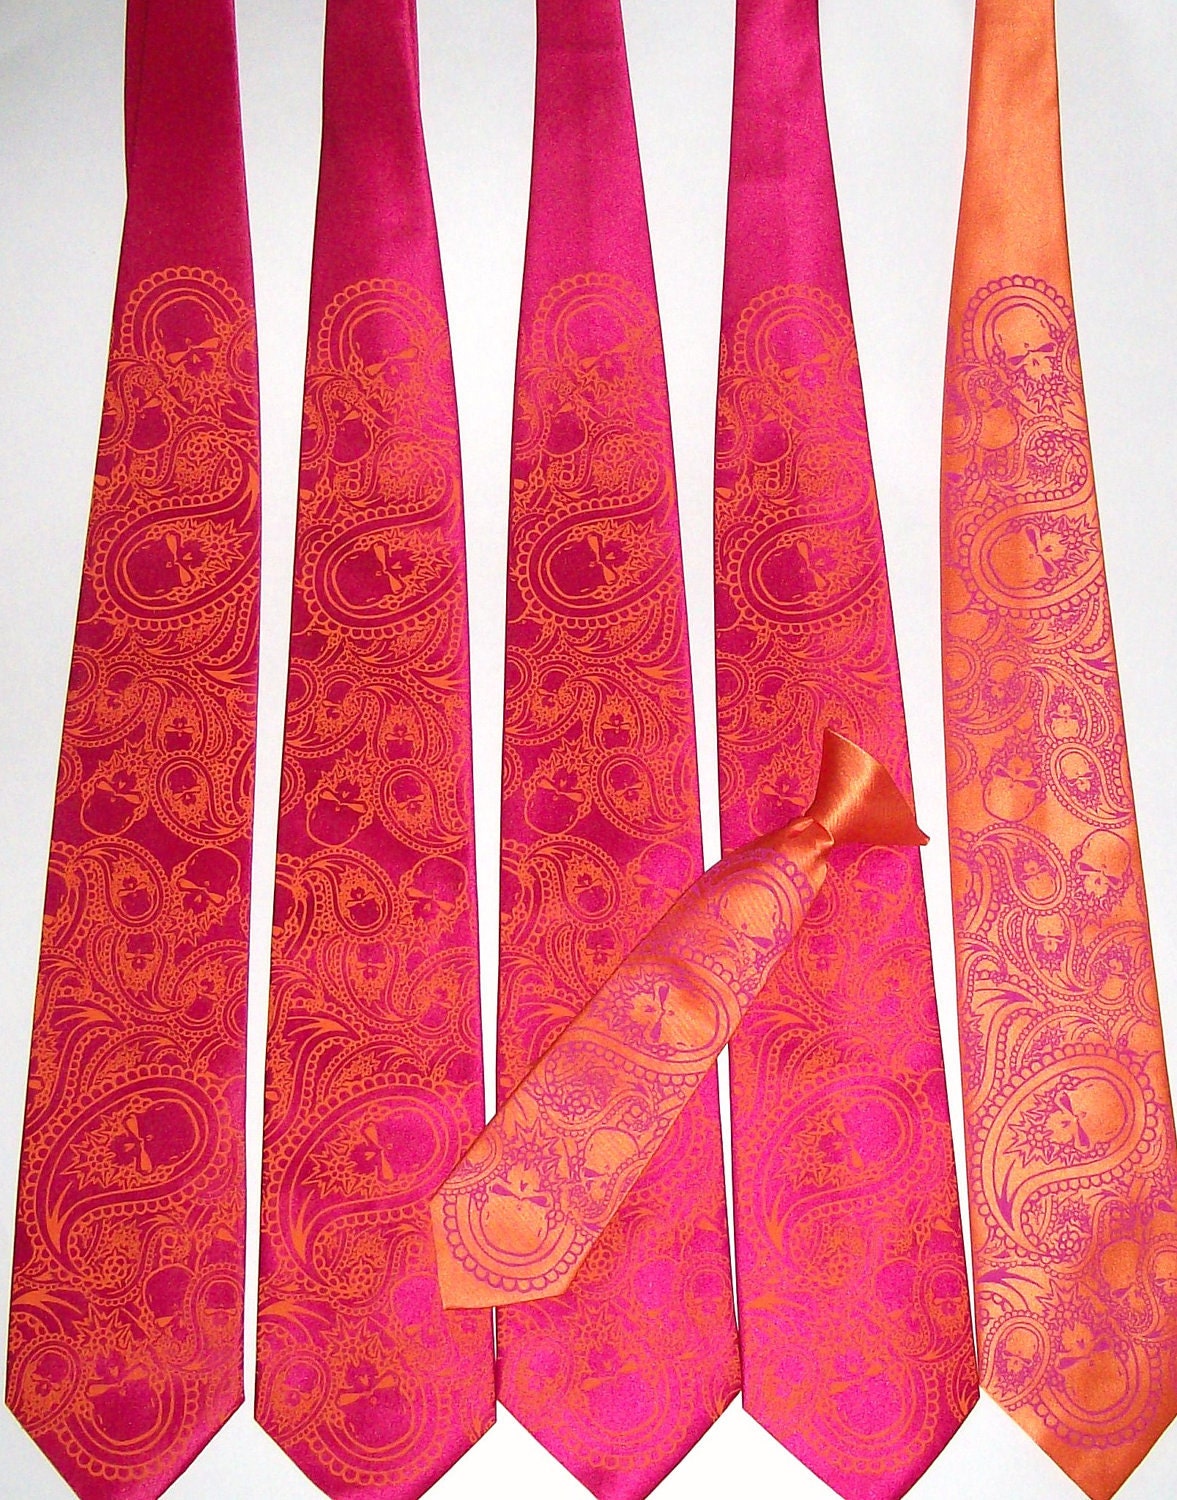 Paisley skull necktie, original art work silk screening , 5 ties - print to order in your colors